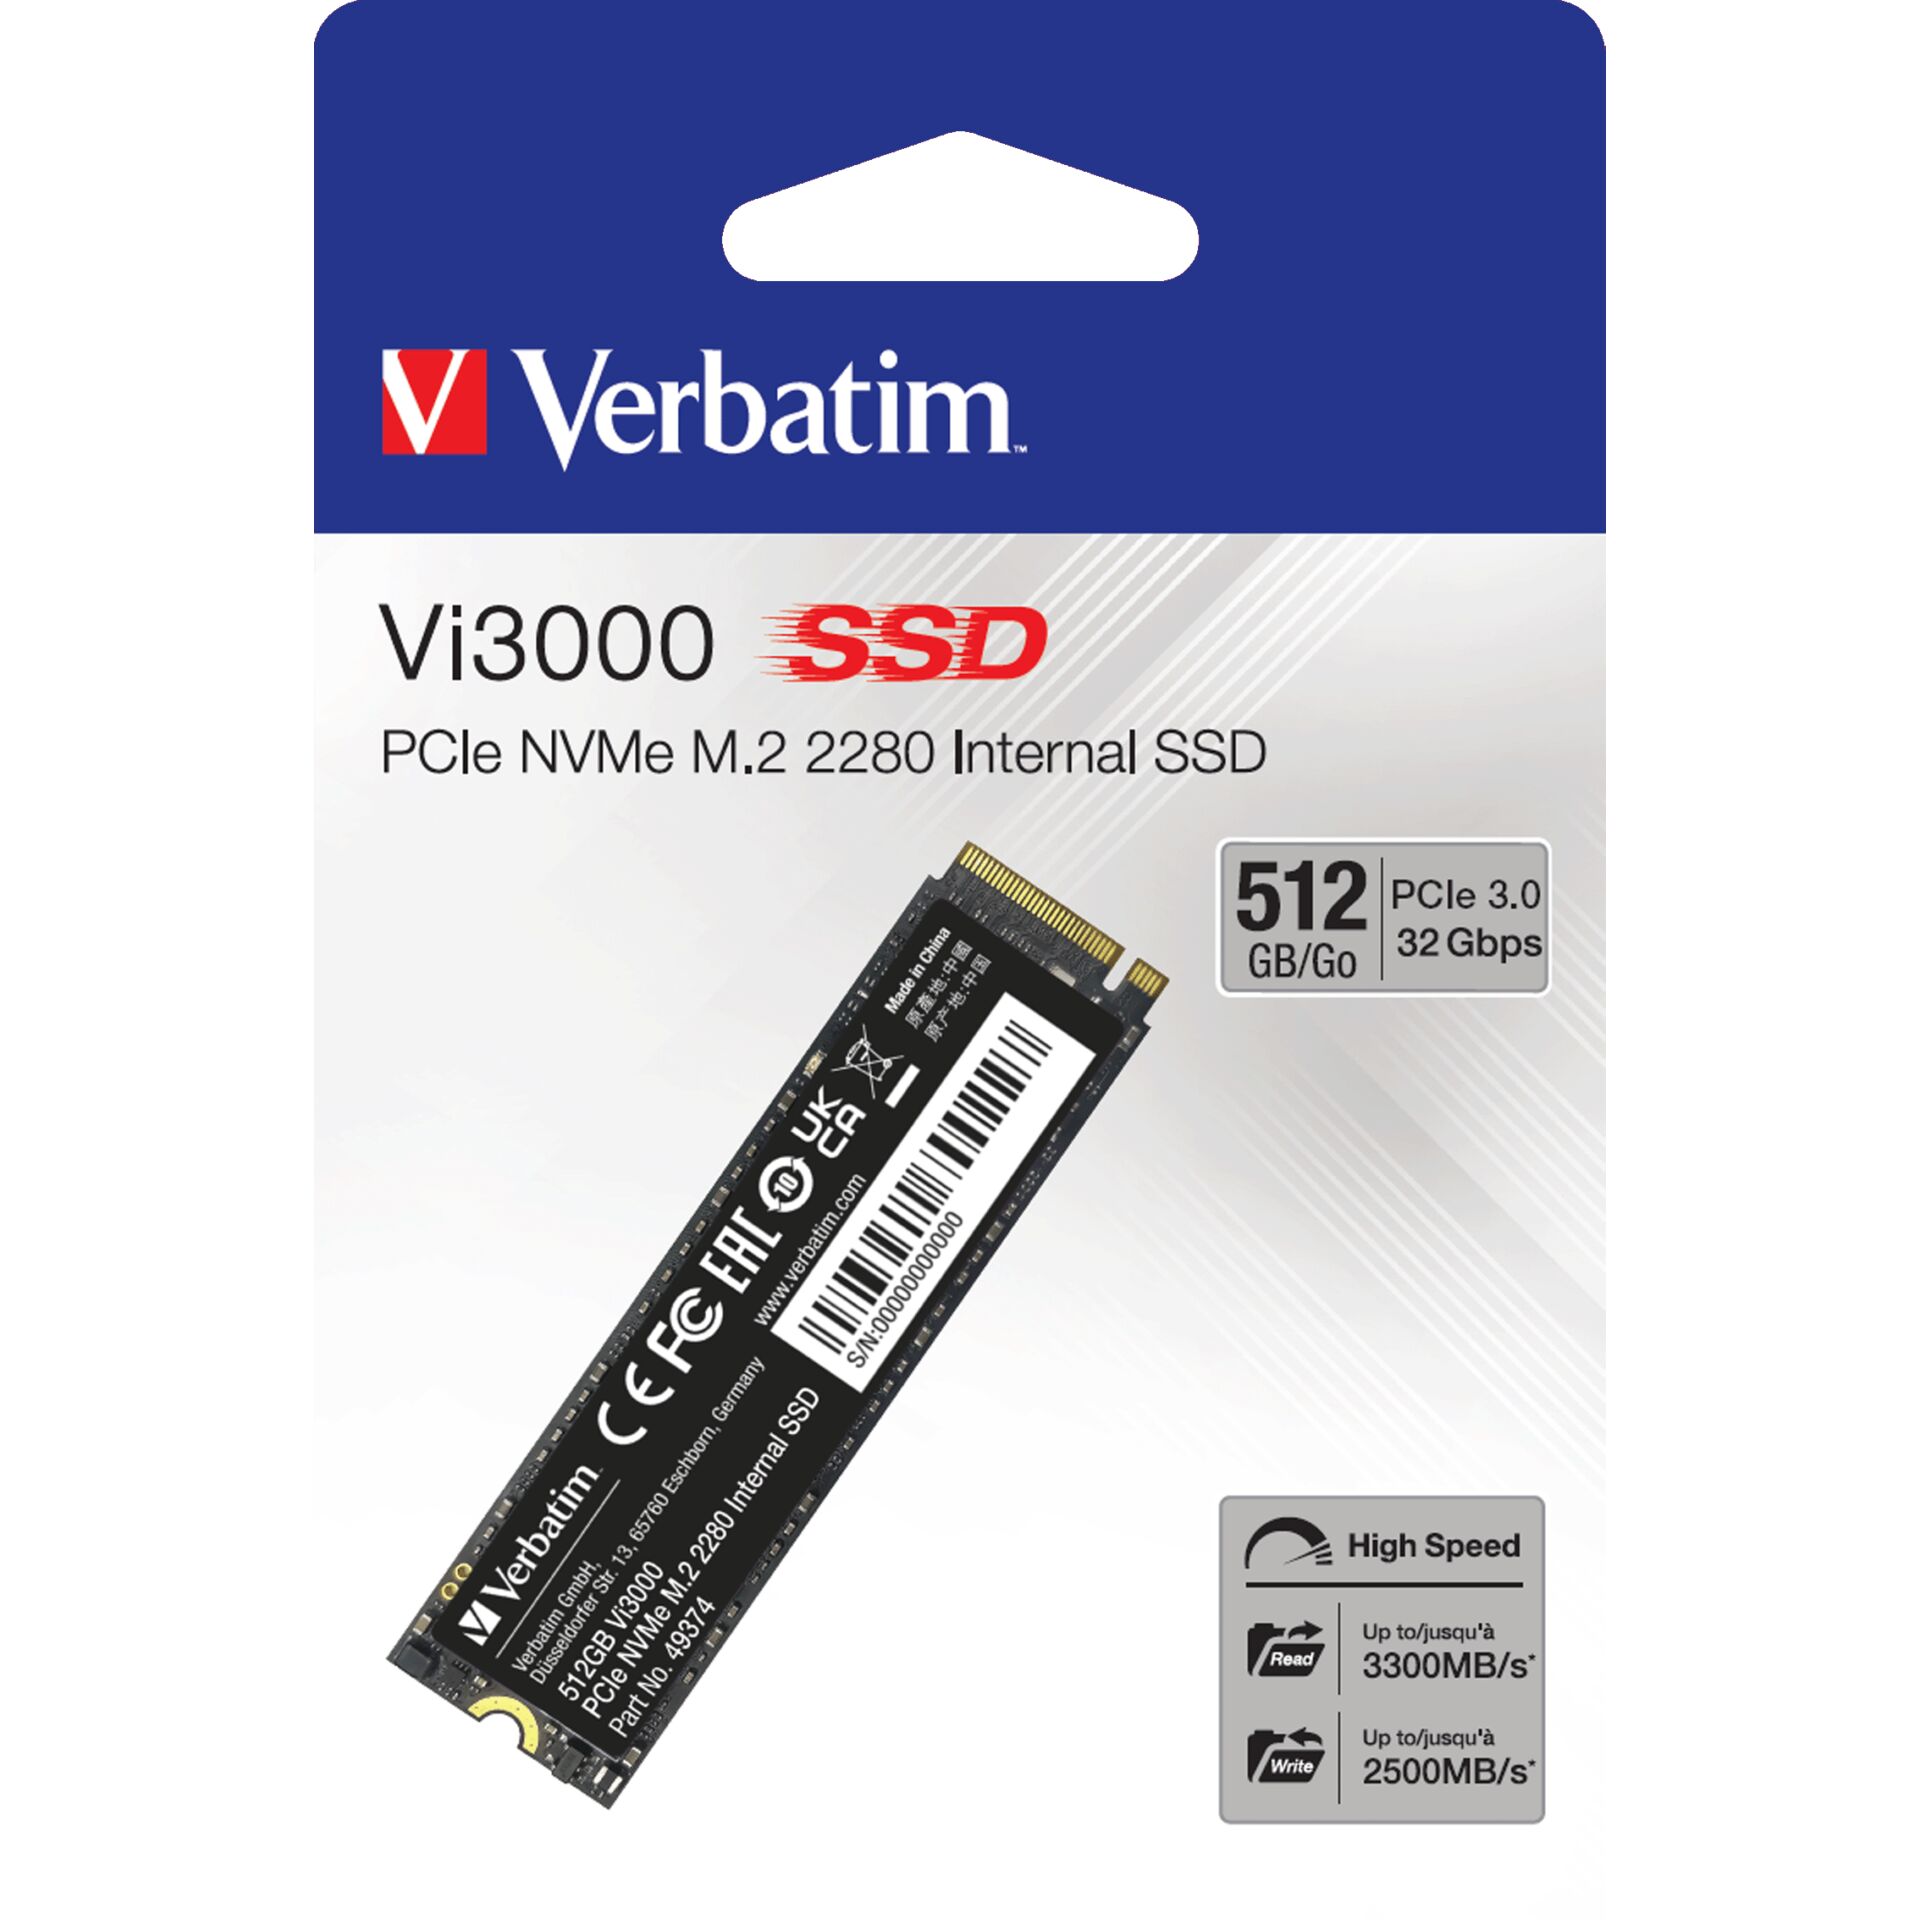 Verbatim Vi3000 PCle NVMe M.2 SSD 512GB                  493